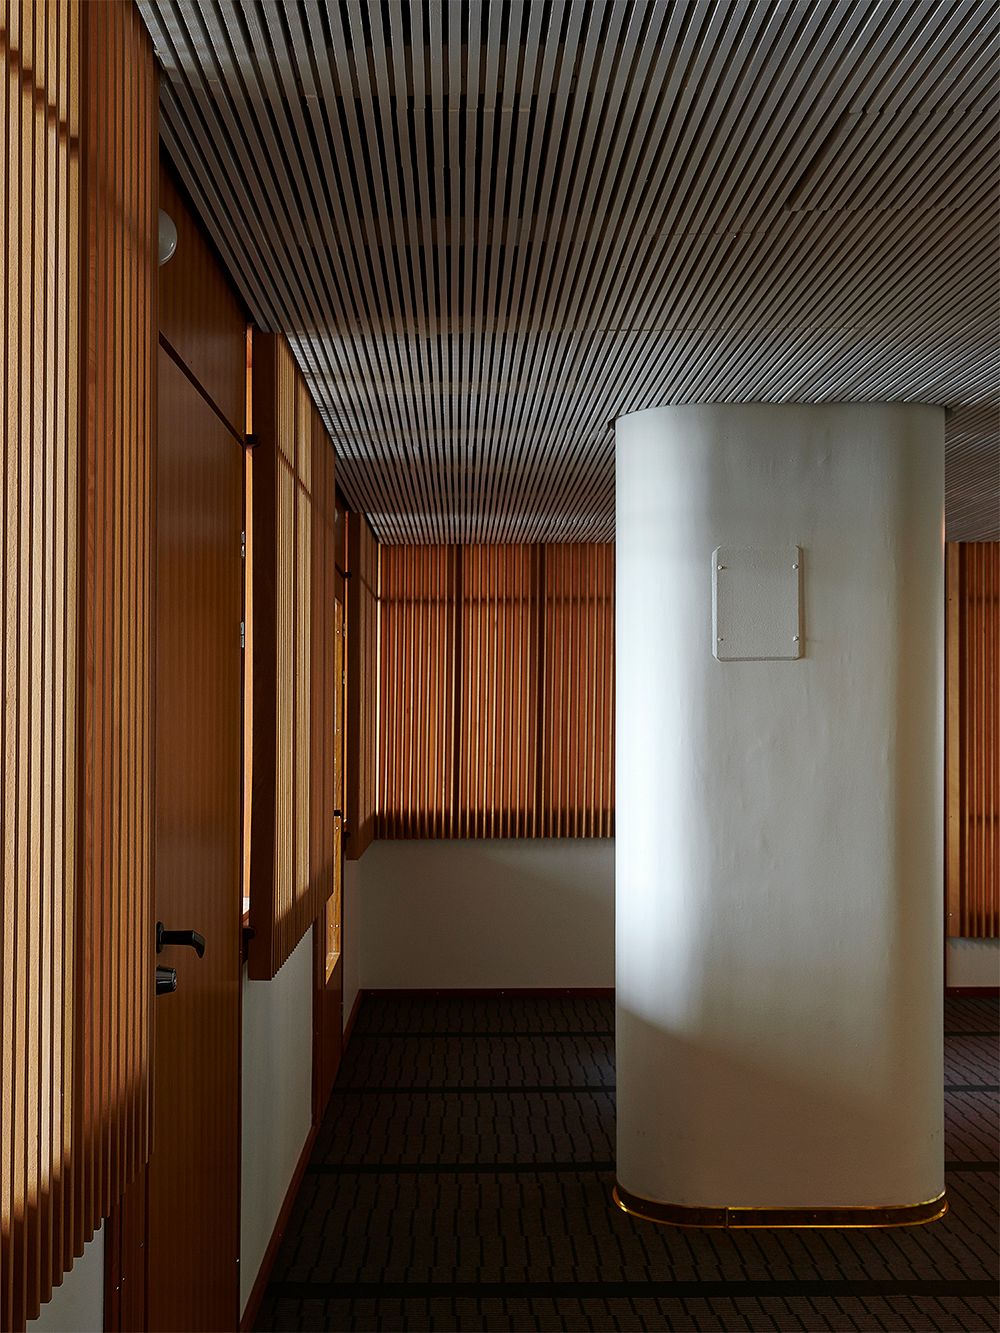 Wooden grids in Alvar Aalto's architecture